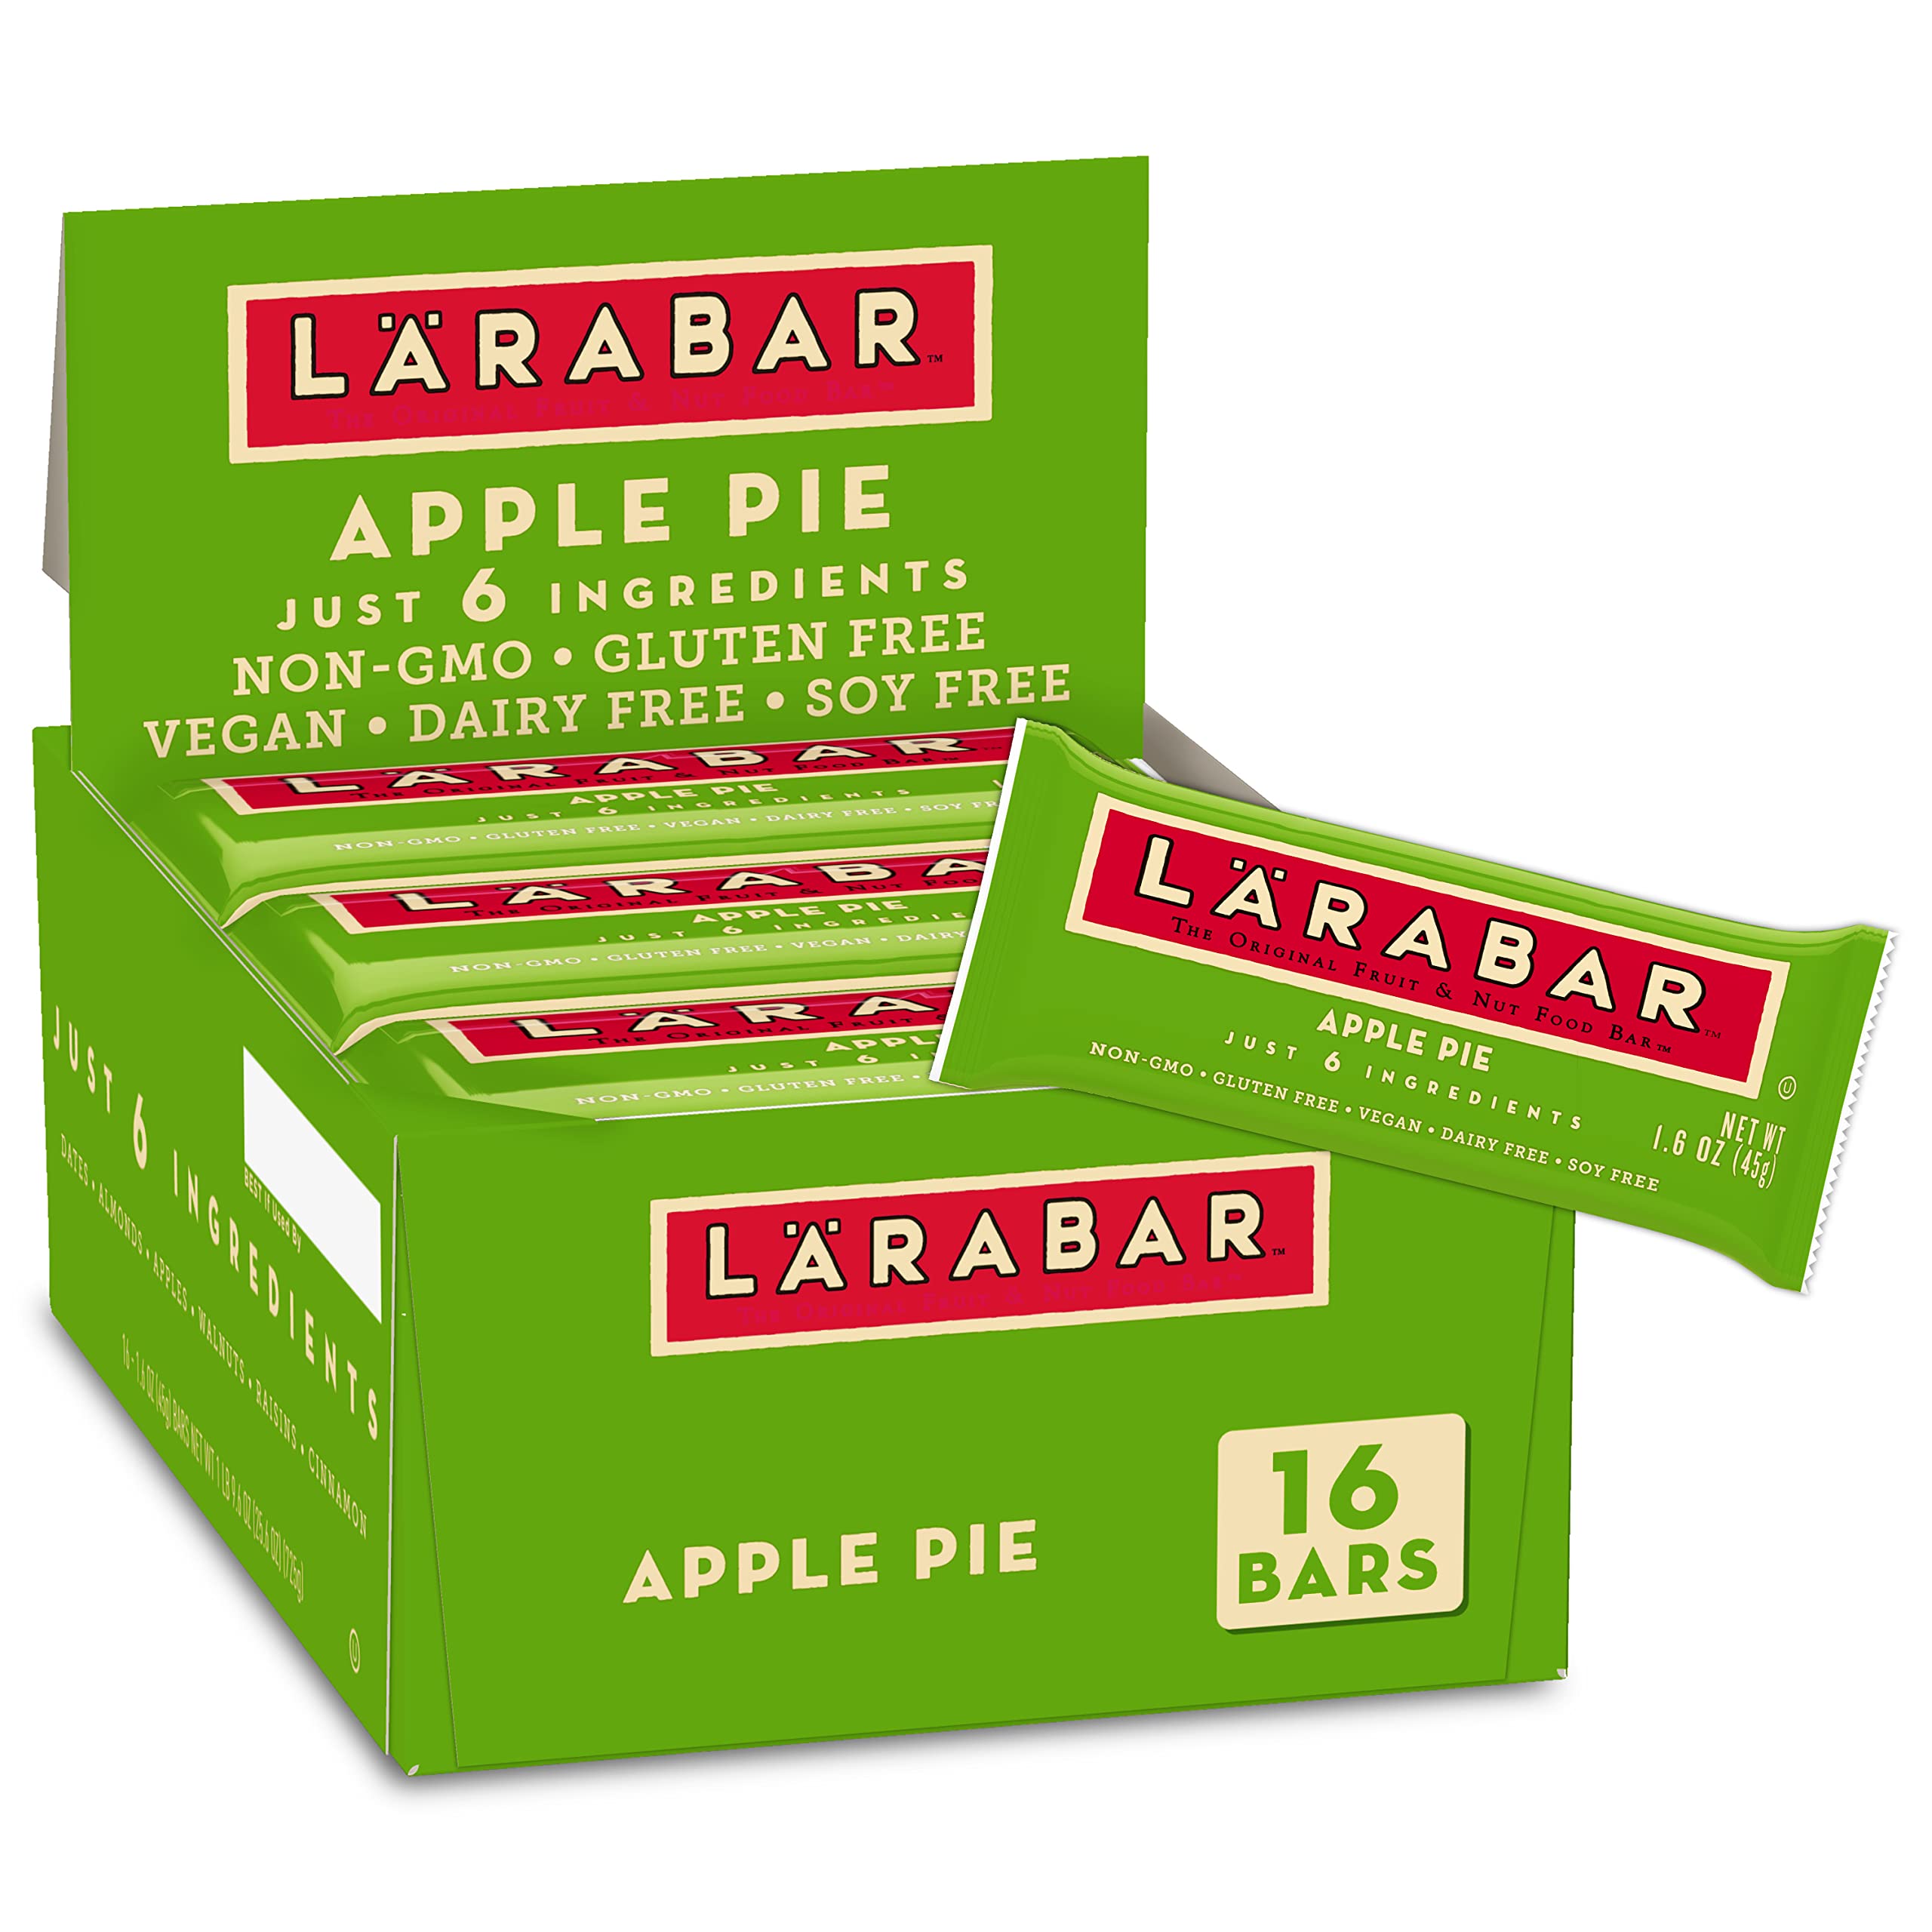 16-Count 1.6-Oz Larabar Gluten Free Vegan Fruit & Nut Bars (Apple Pie) $10.36 w/ S&S + Free Shipping w/ Prime on orders $35